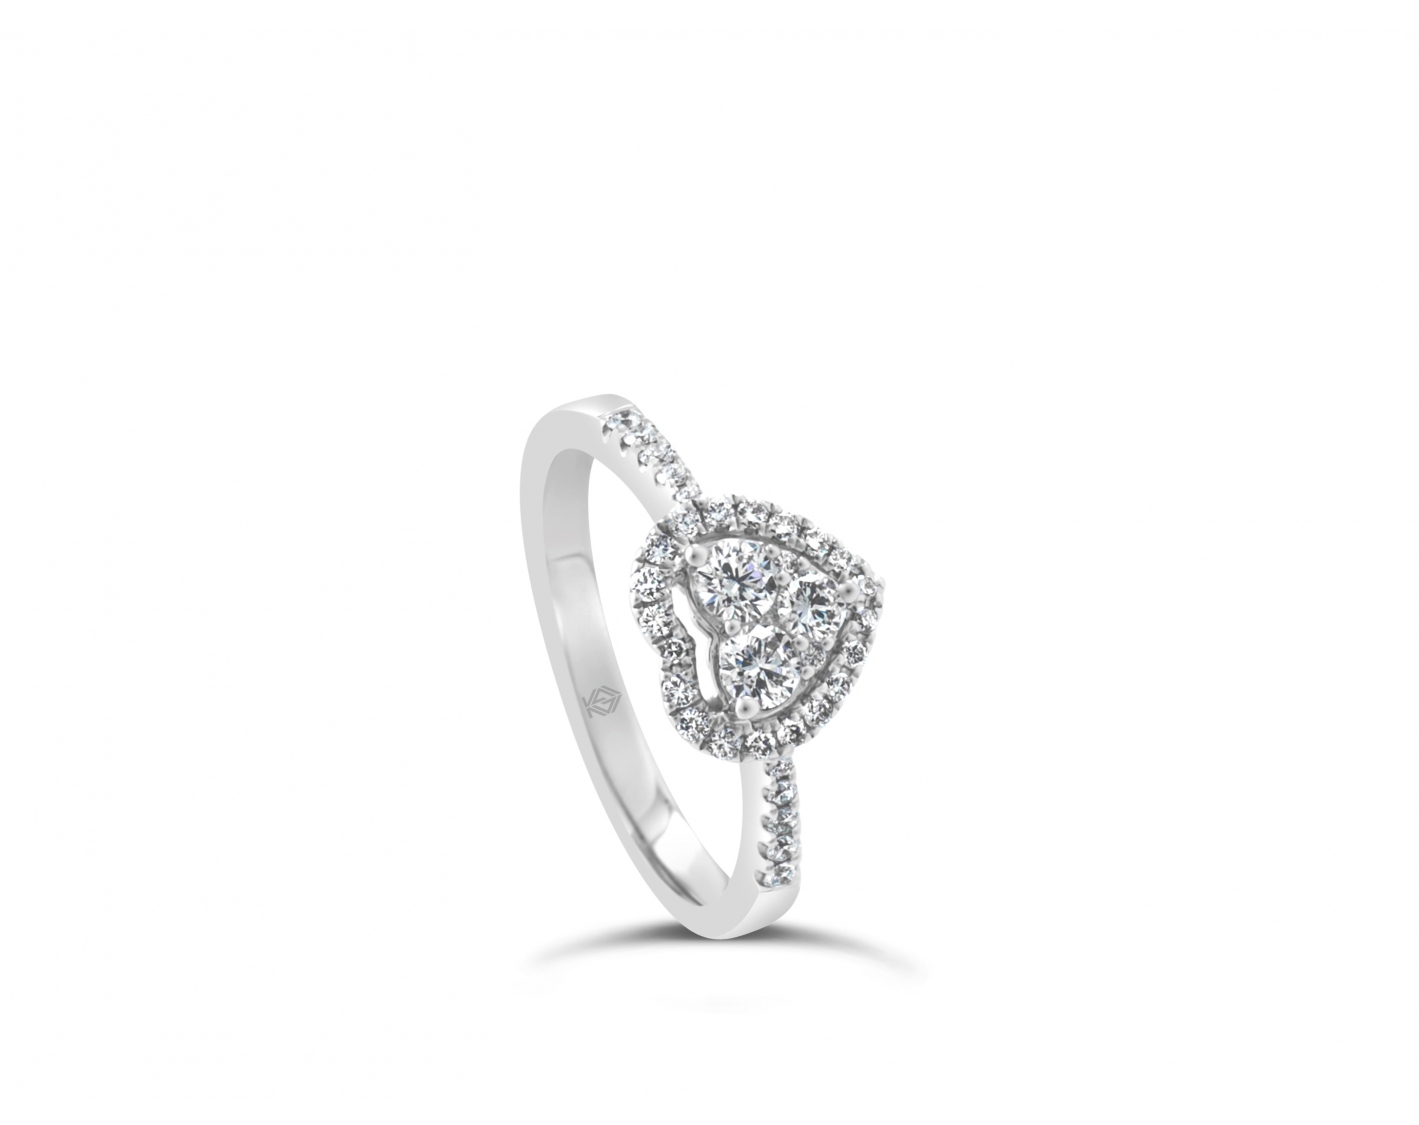 18k rose gold heart shaped halo illusion set engagement ring with round pave set diamonds Photos & images